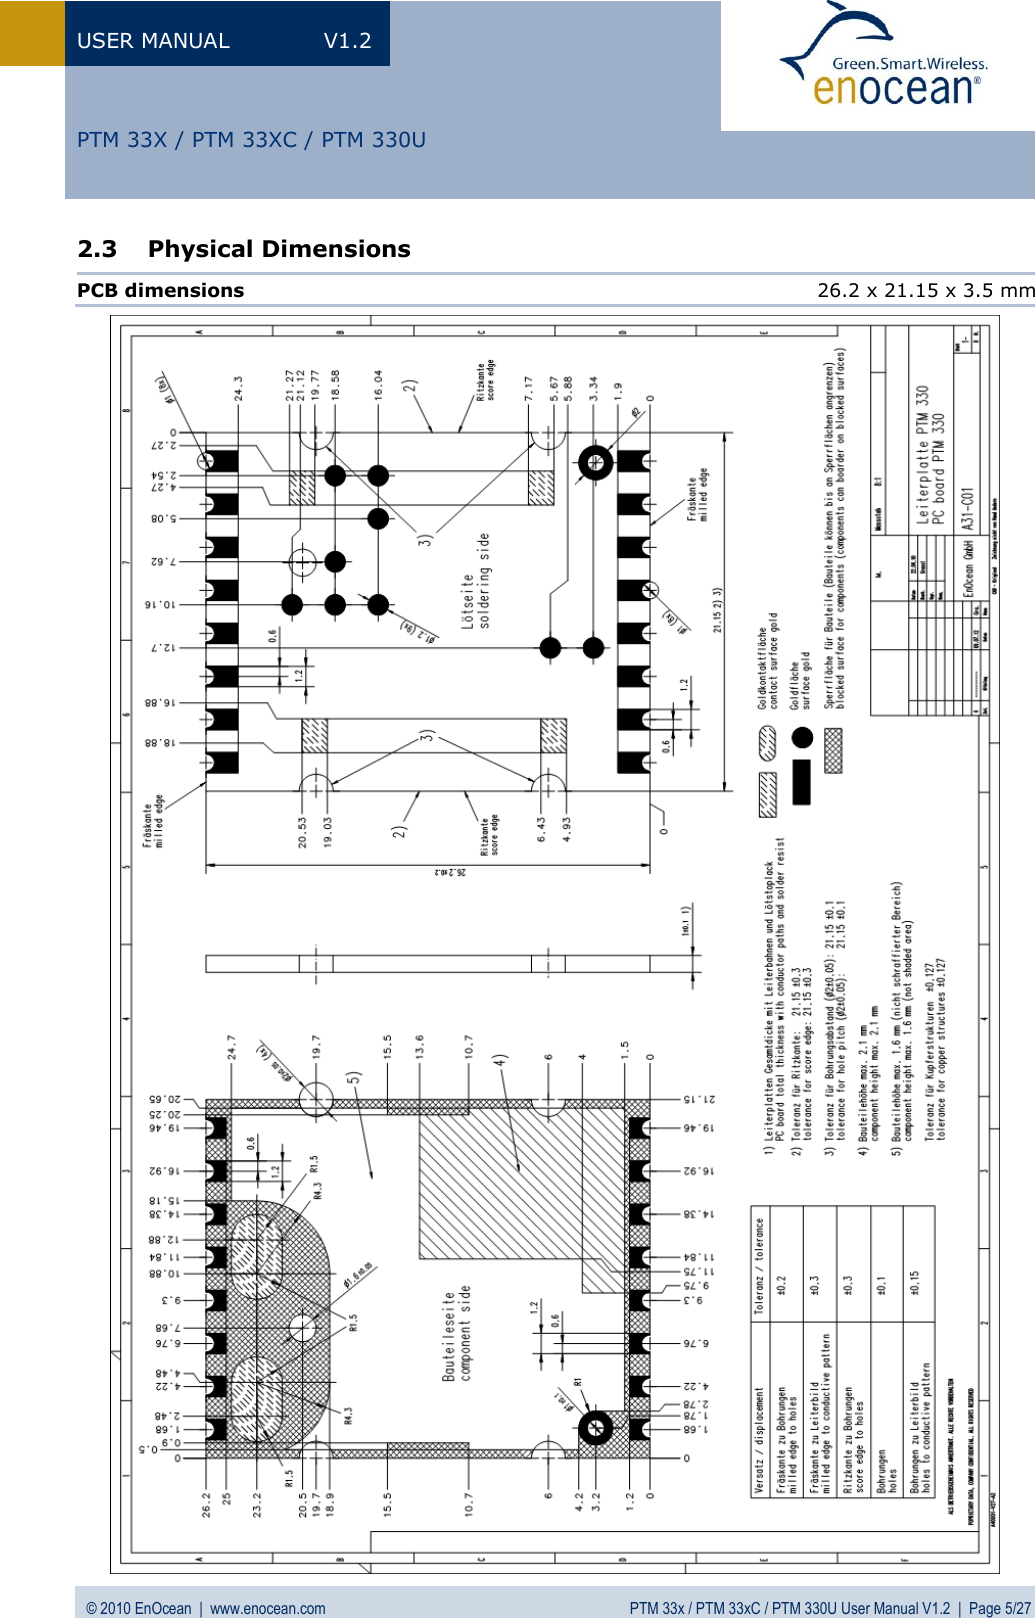 USER MANUAL  V1.2 © 2010 EnOcean  |  www.enocean.com  PTM 33x / PTM 33xC / PTM 330U User Manual V1.2  |  Page 5/27   PTM 33X / PTM 33XC / PTM 330U 2.3 Physical Dimensions                                                PCB dimensions                         26.2 x 21.15 x 3.5 mm                          